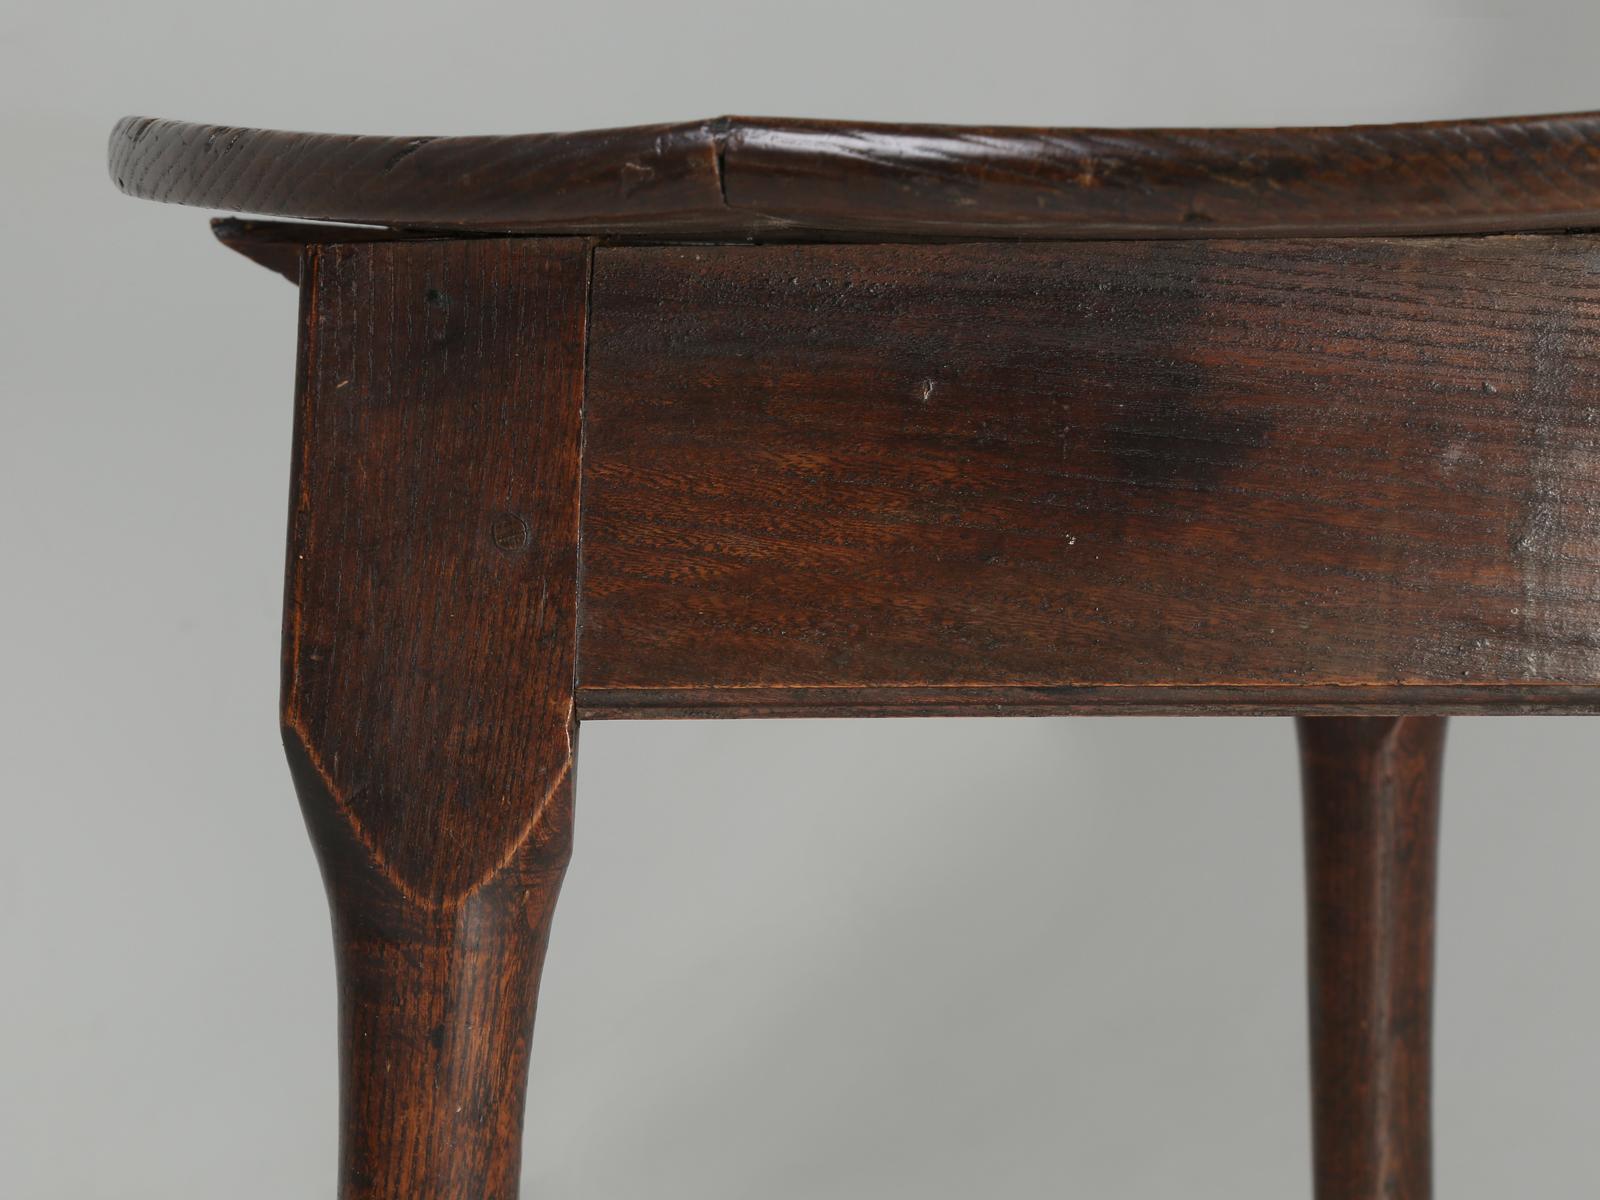 Antique English Cricket Table with a Great Original Patina, circa 1800s 4